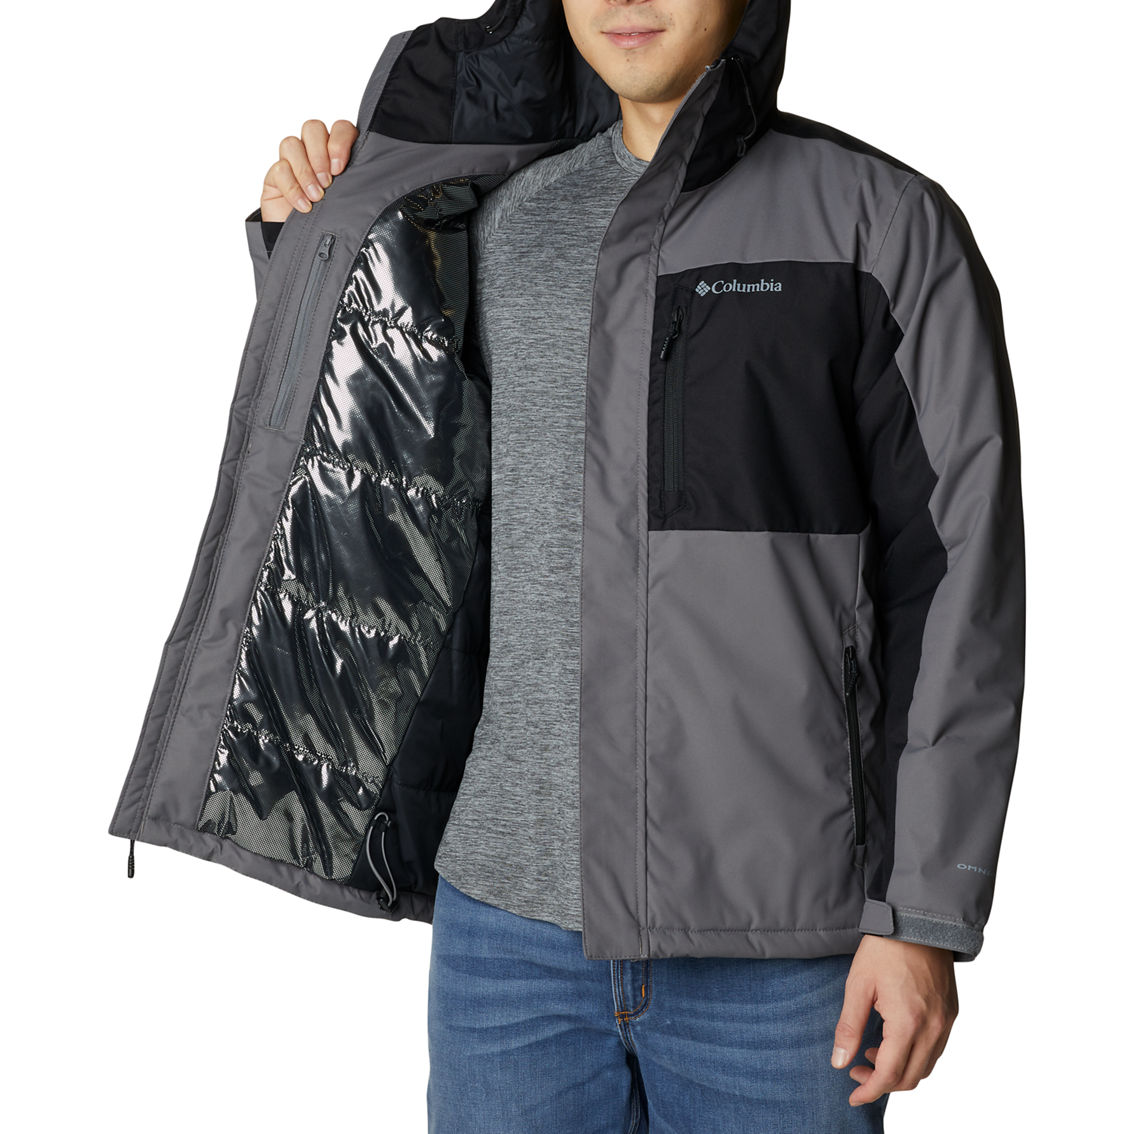 Columbia Tipton Peak Ii Insulated Jacket | Jackets | Clothing ...